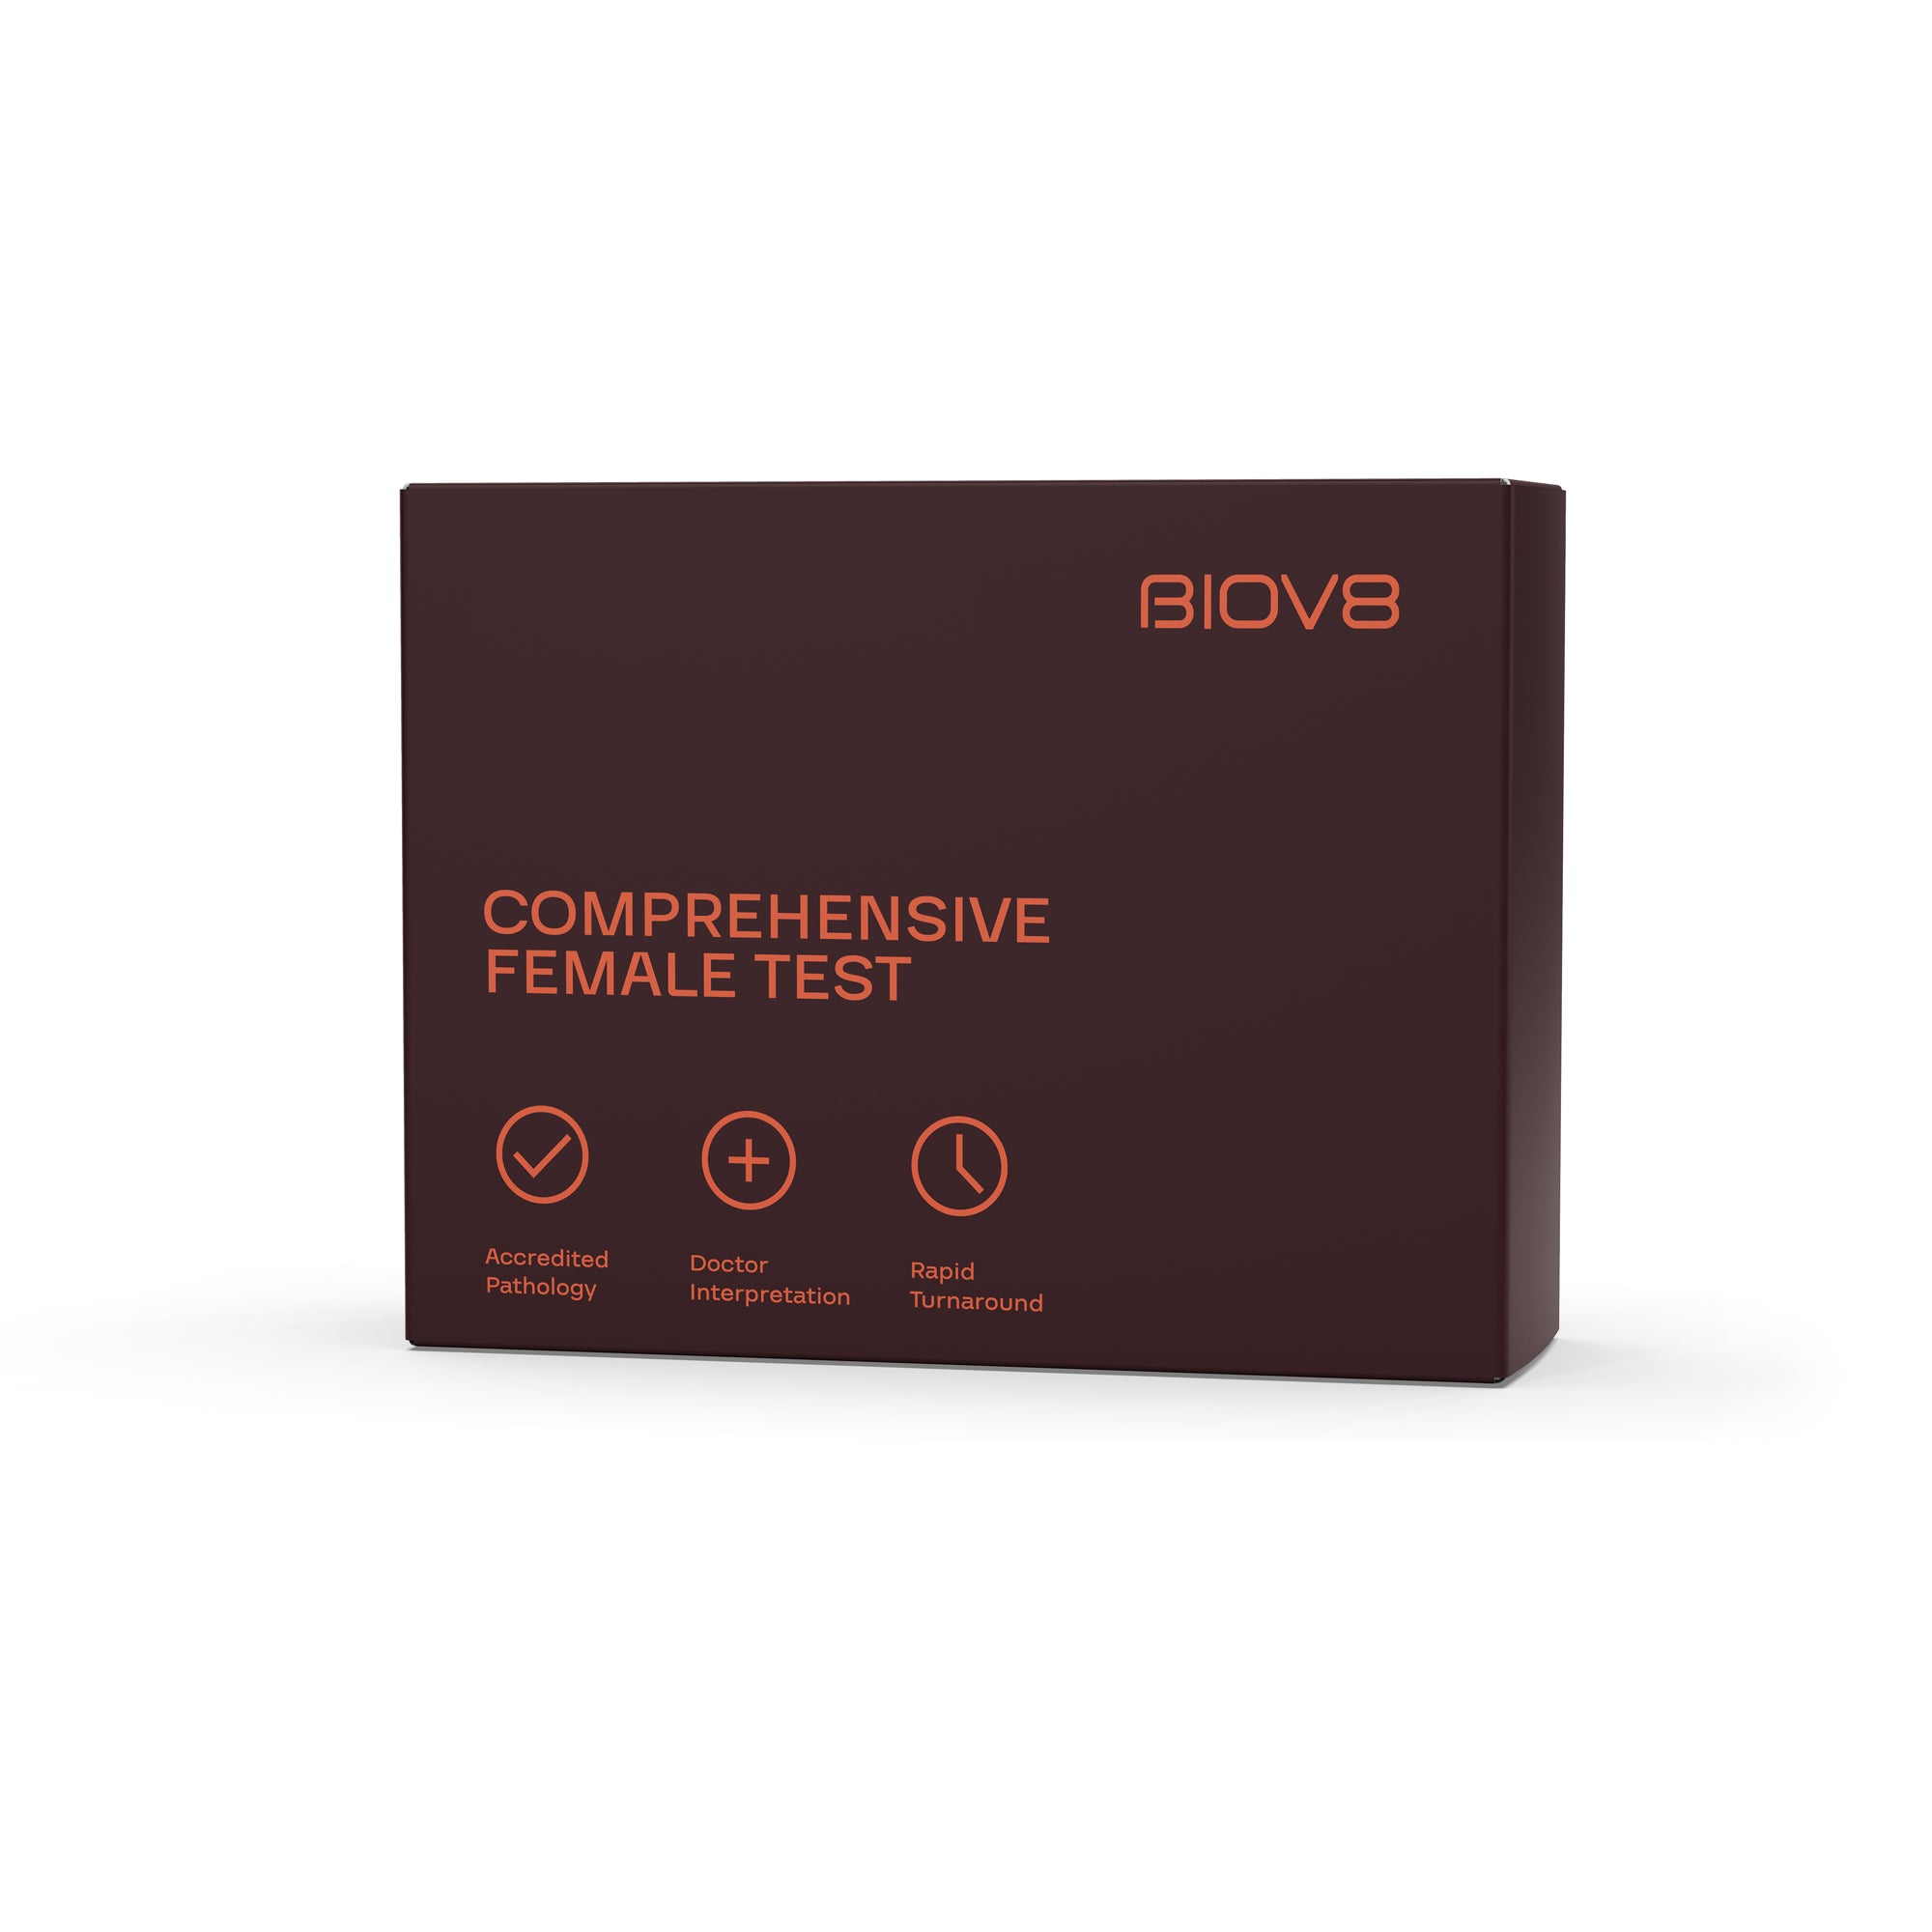 Biov8's Female Performance blood work analysis kit